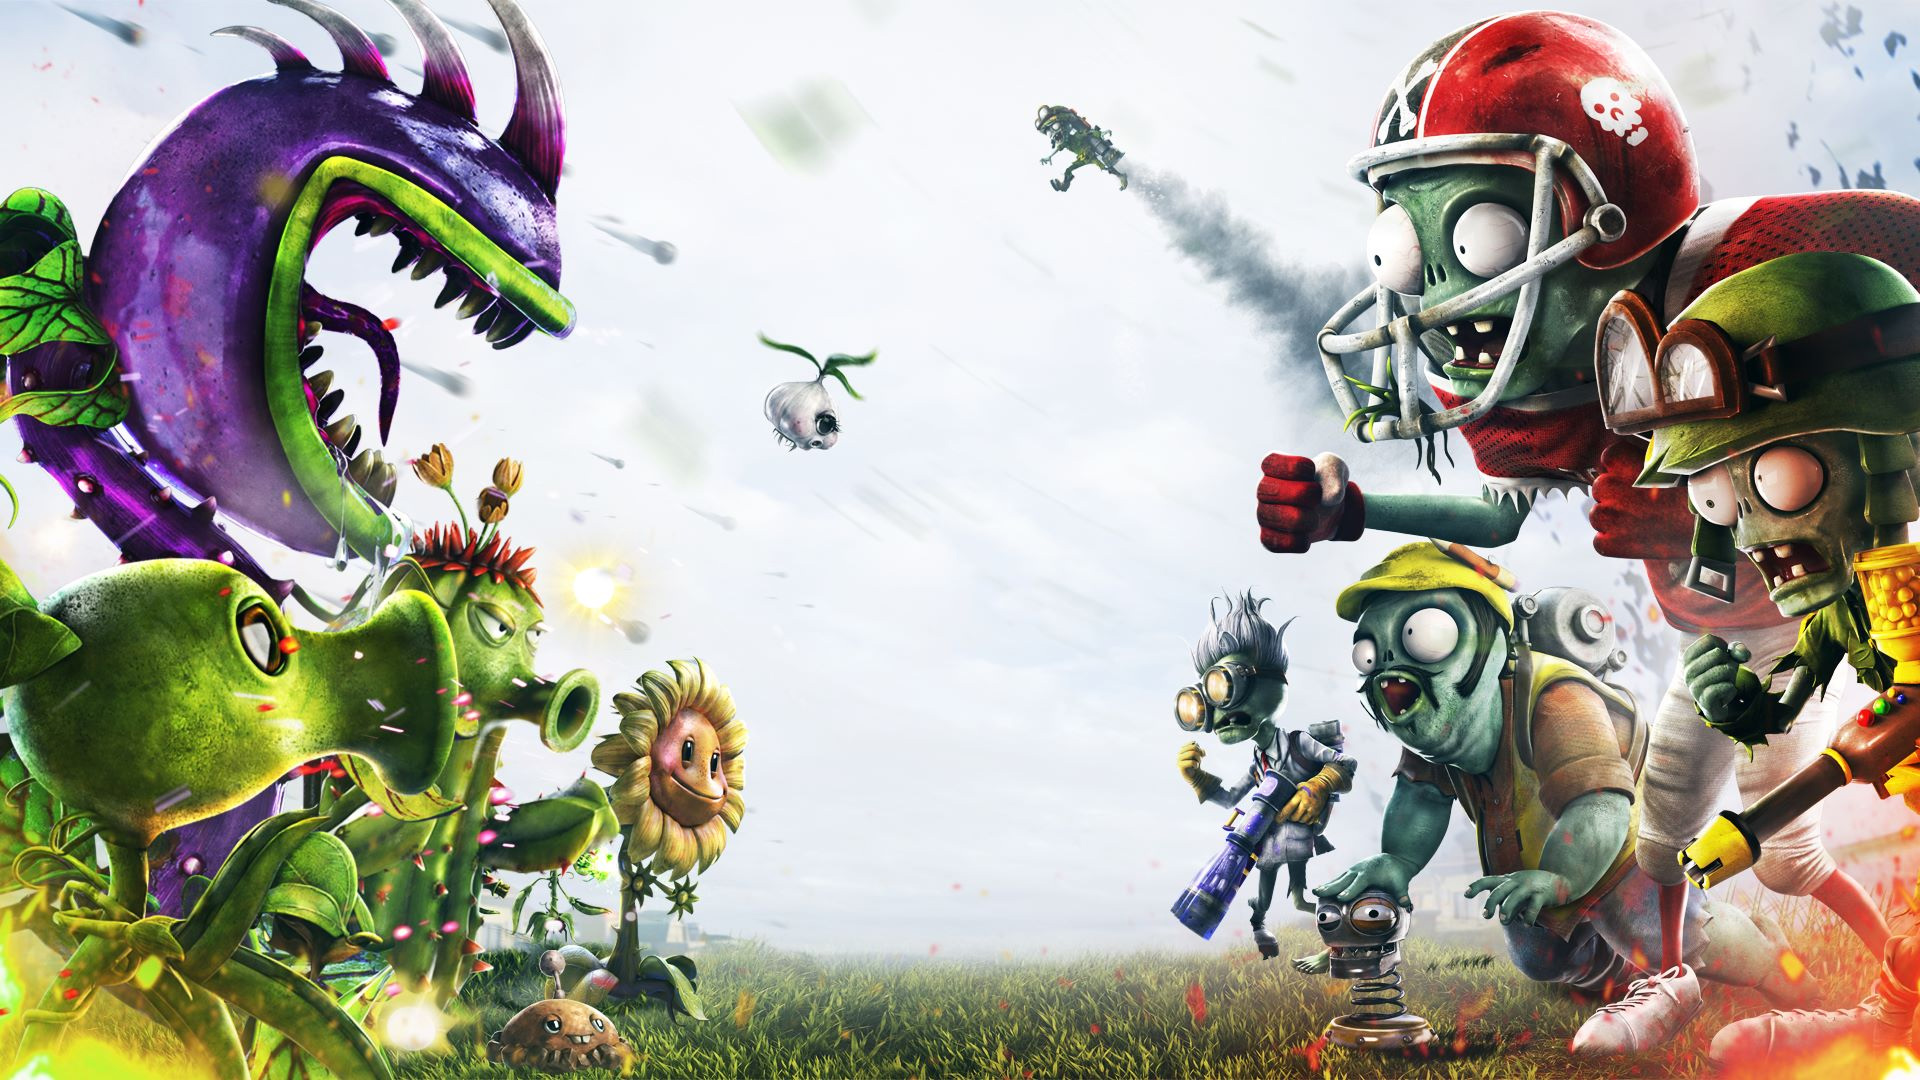 Plants vs. Zombies Garden Warfare 2 gets 12 maps when it launches